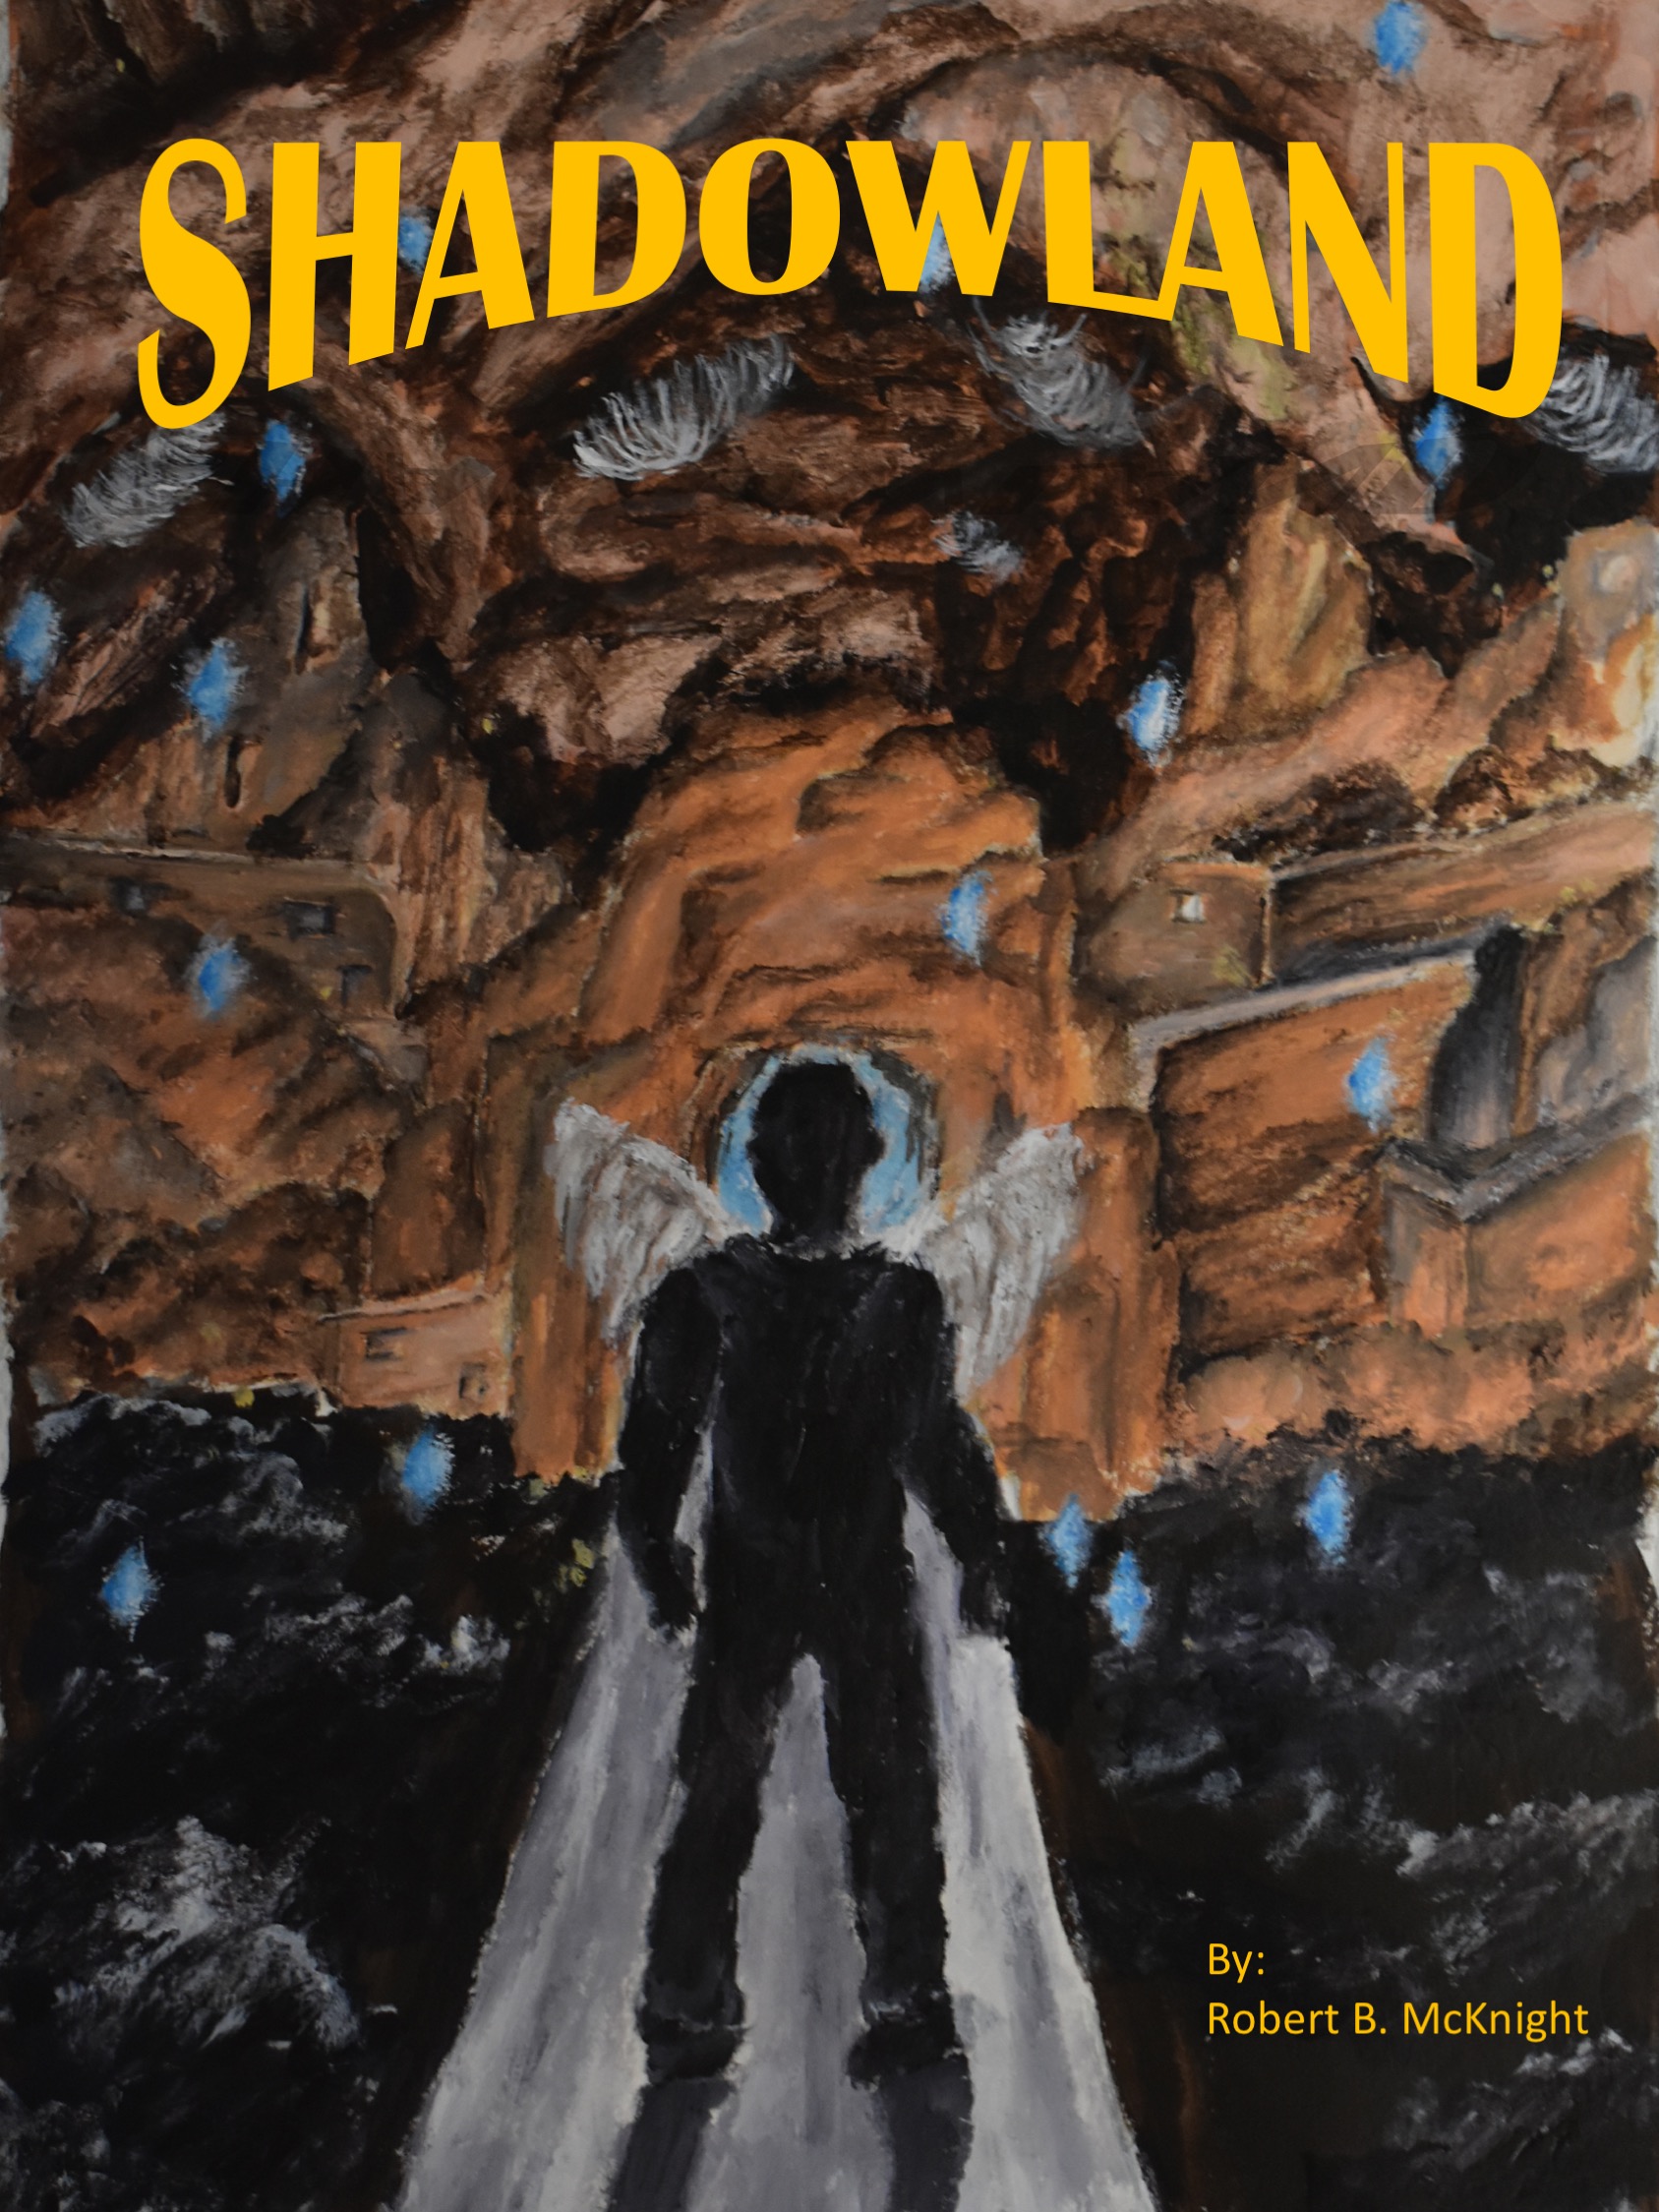 FREE: Shadowland by Robert B McKnight